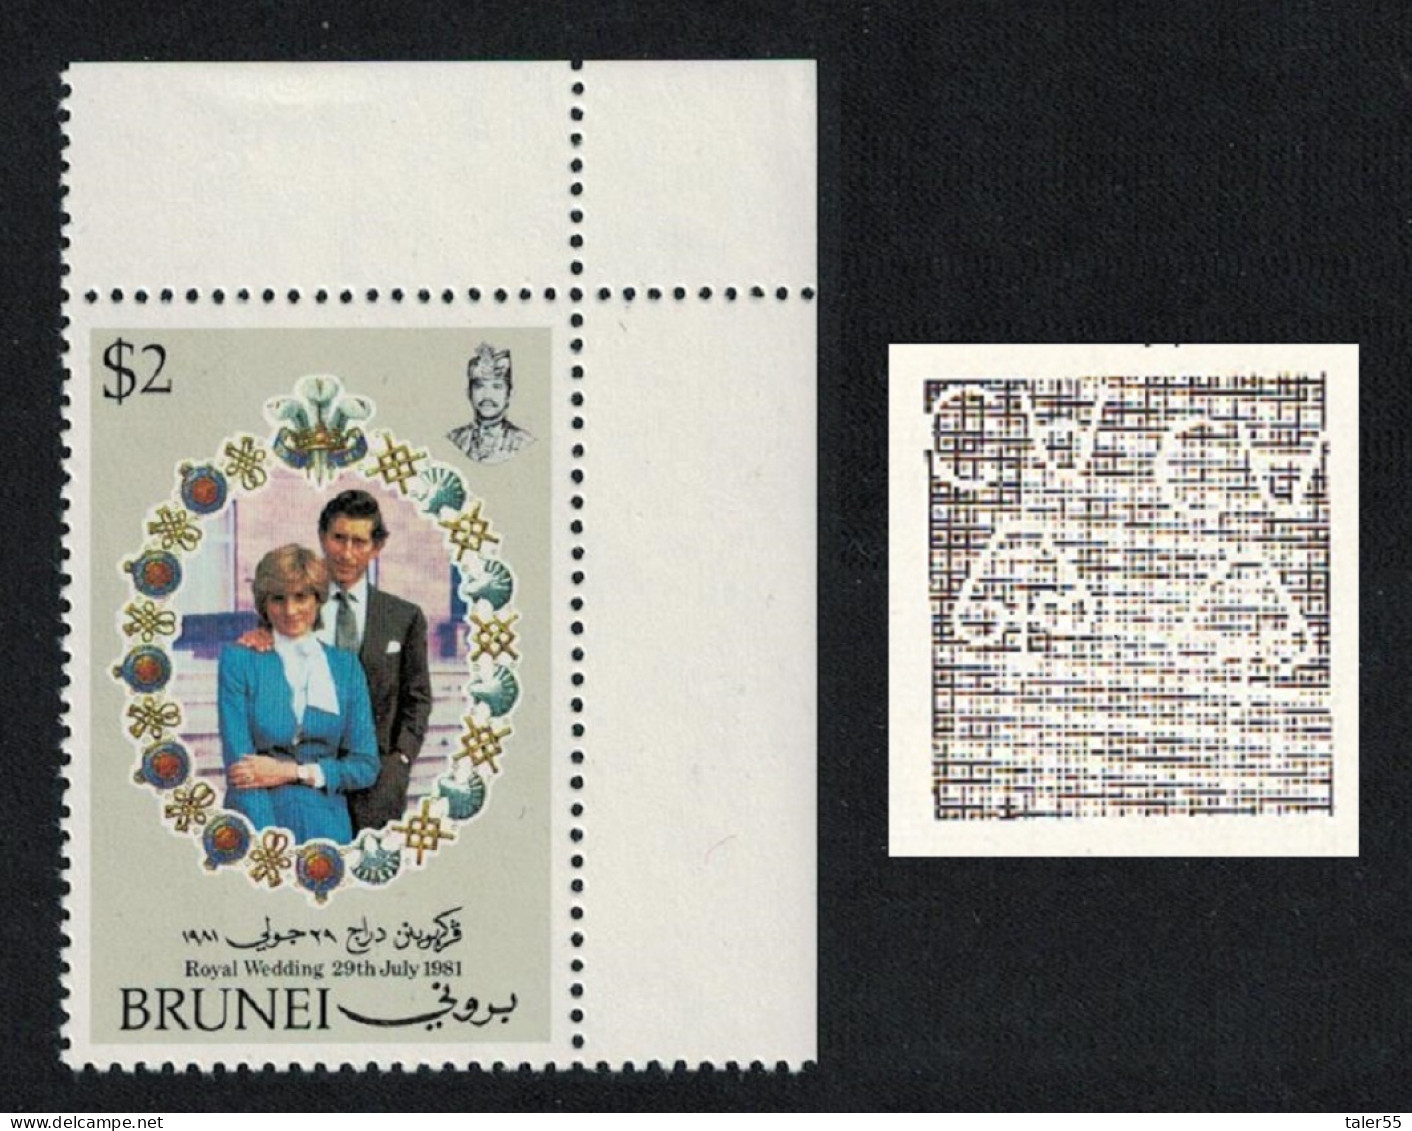 Brunei Charles And Diana Royal Wedding Inverted Watermark RAR 1981 MNH SG#306w MI#254 - Brunei (...-1984)